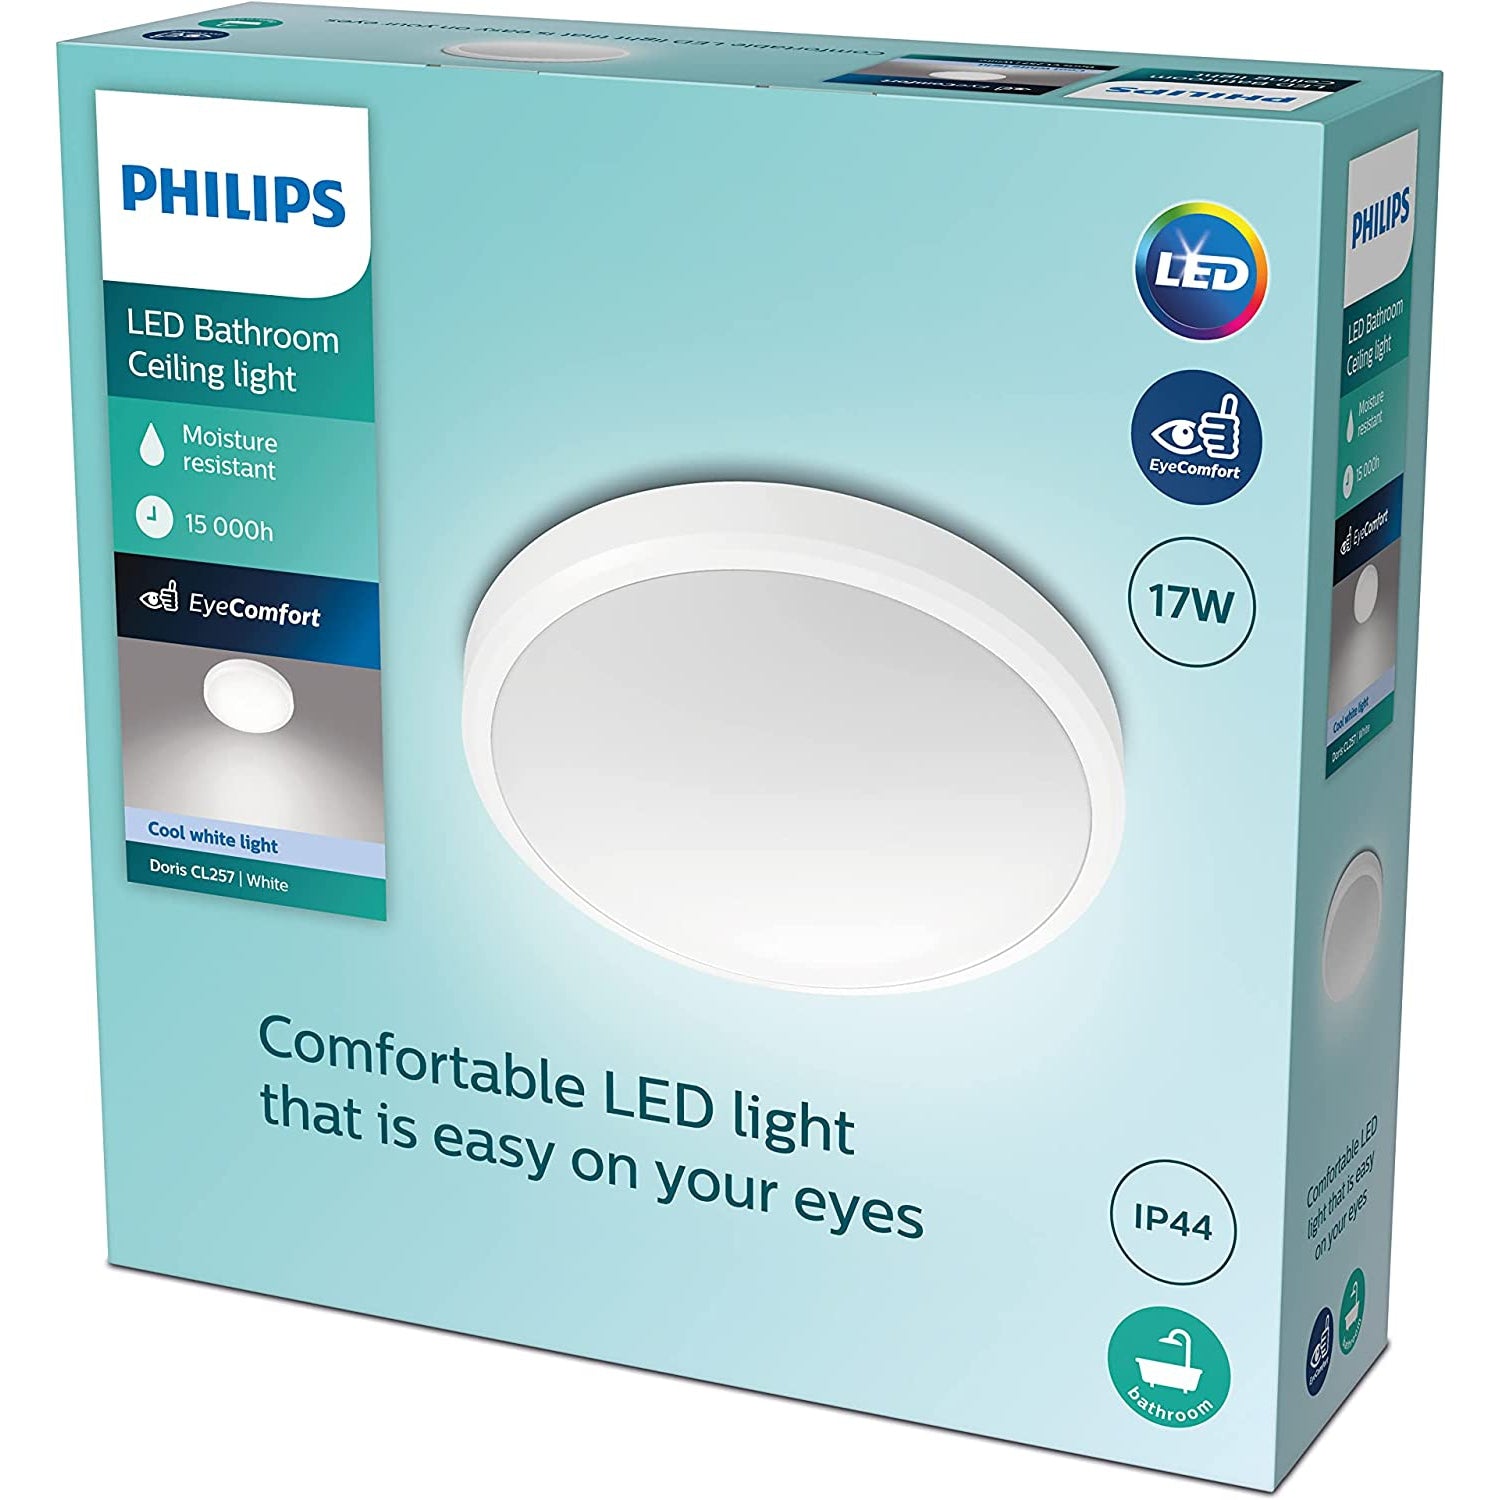 Philips Doris CL257 LED Bathroom Ceiling Light, Chrome